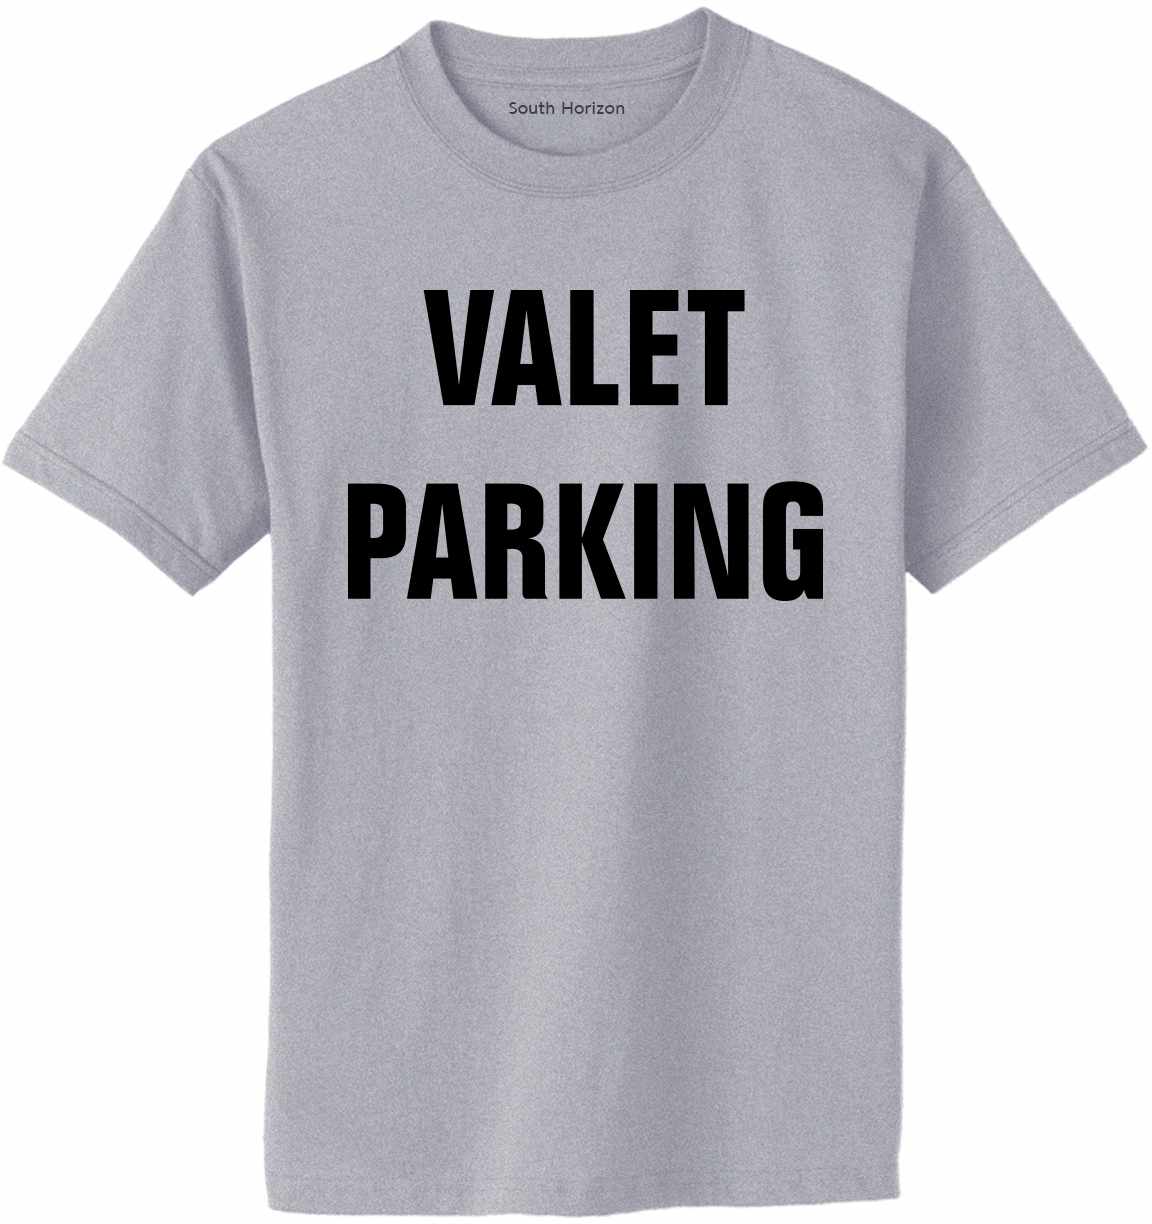 VALET PARKING Adult T-Shirt (#208-1)